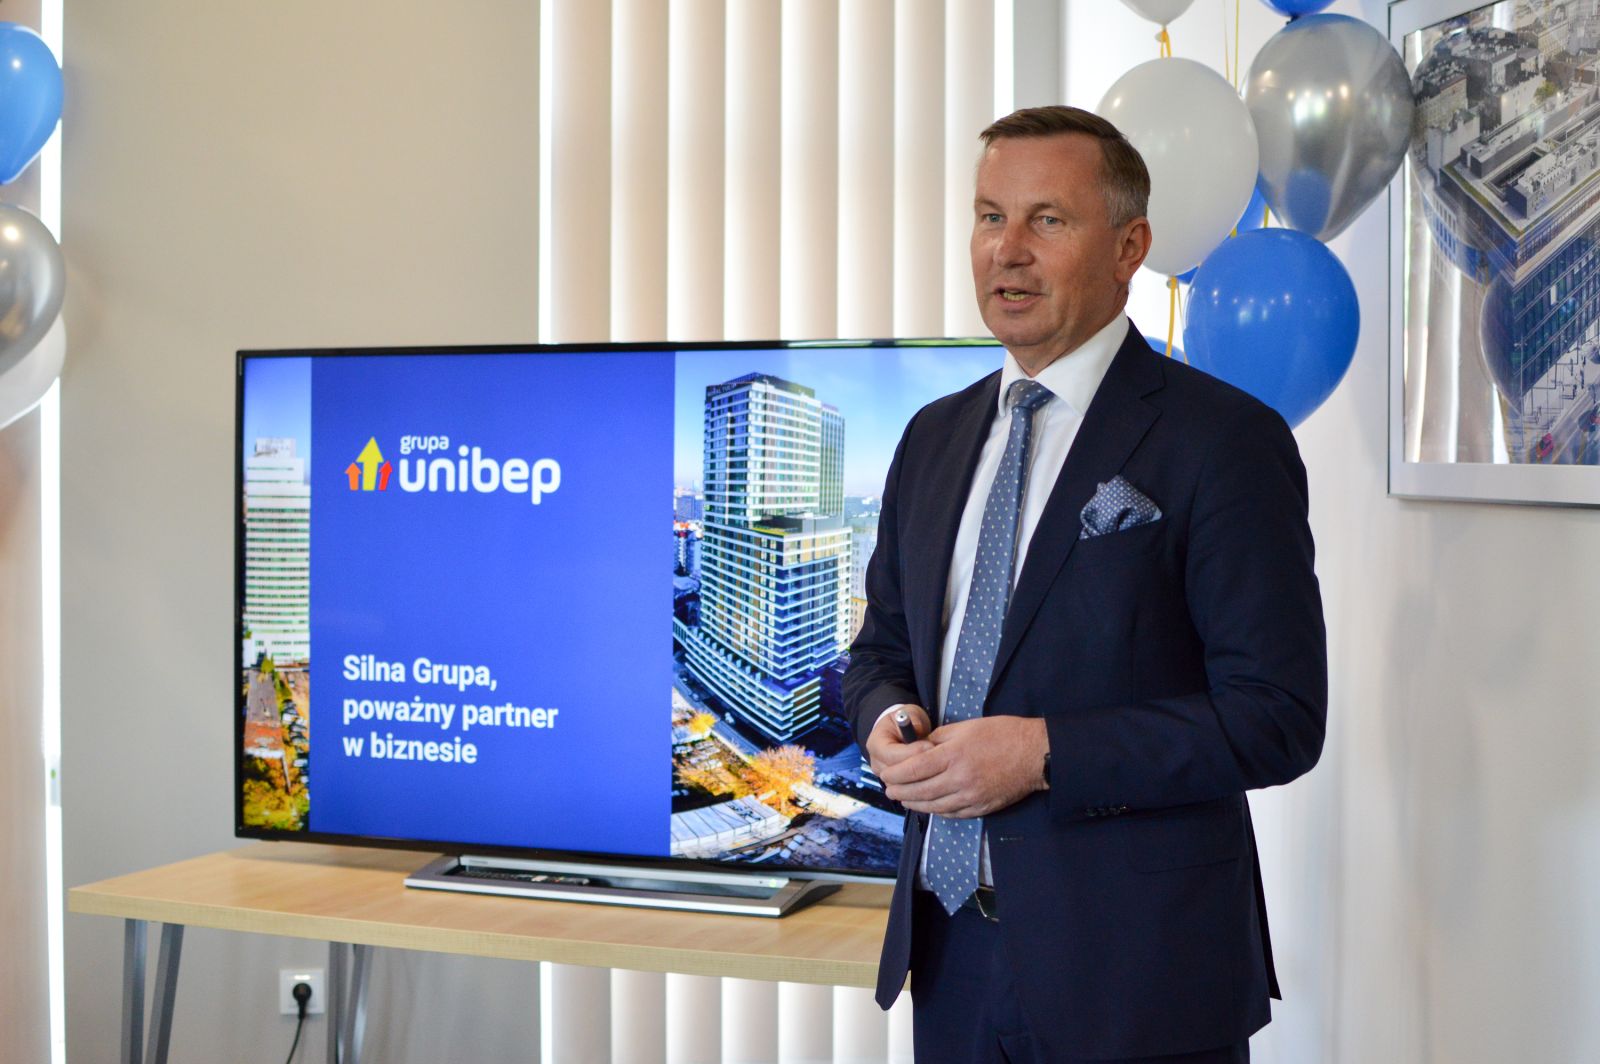 Unibep SA has opened an office in Racibórz